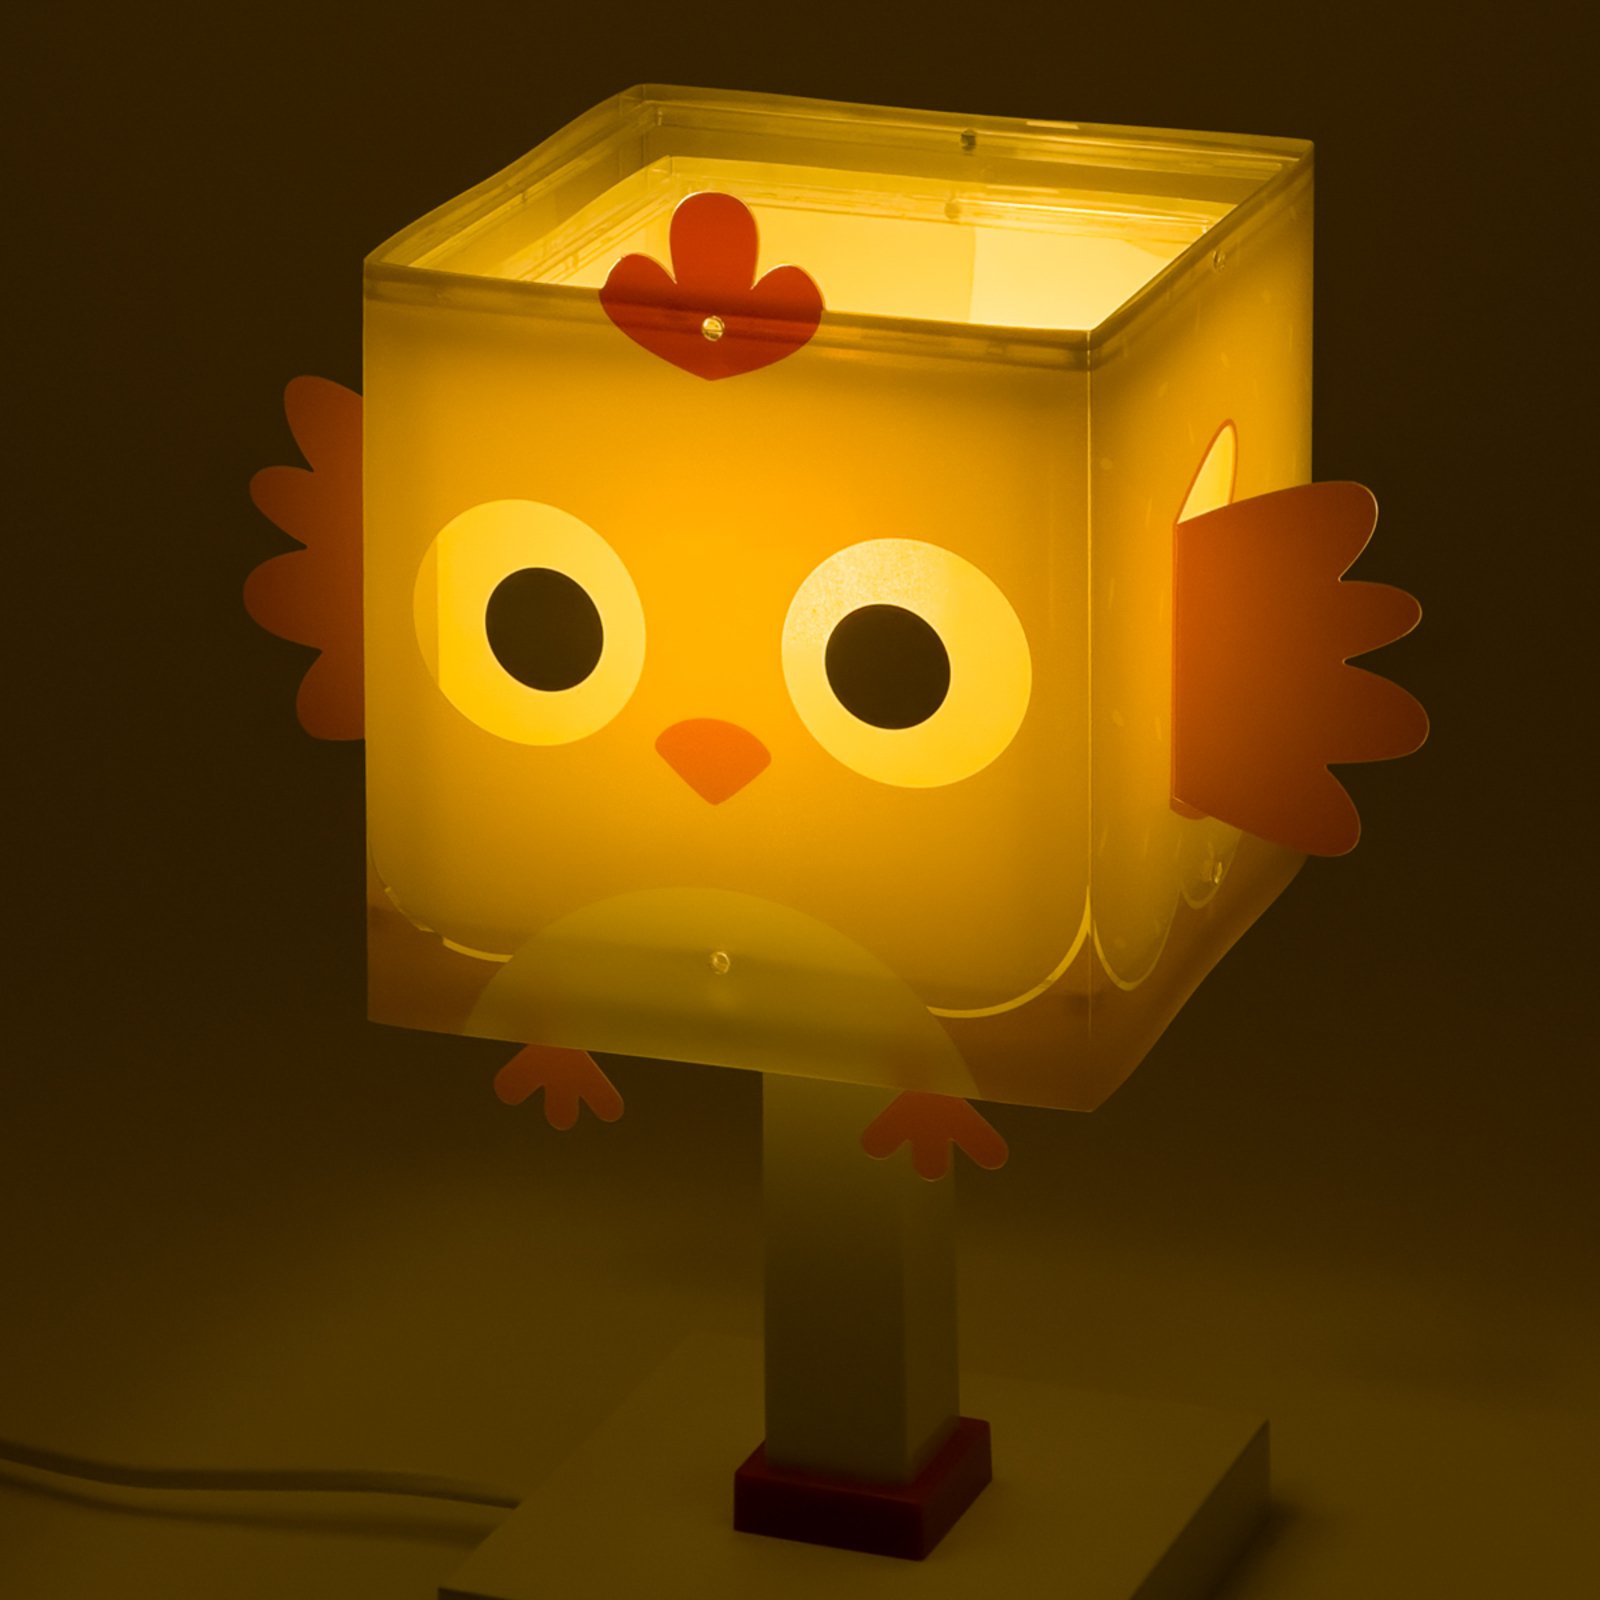 Dalber Little Chicken stolová lampa pre deti